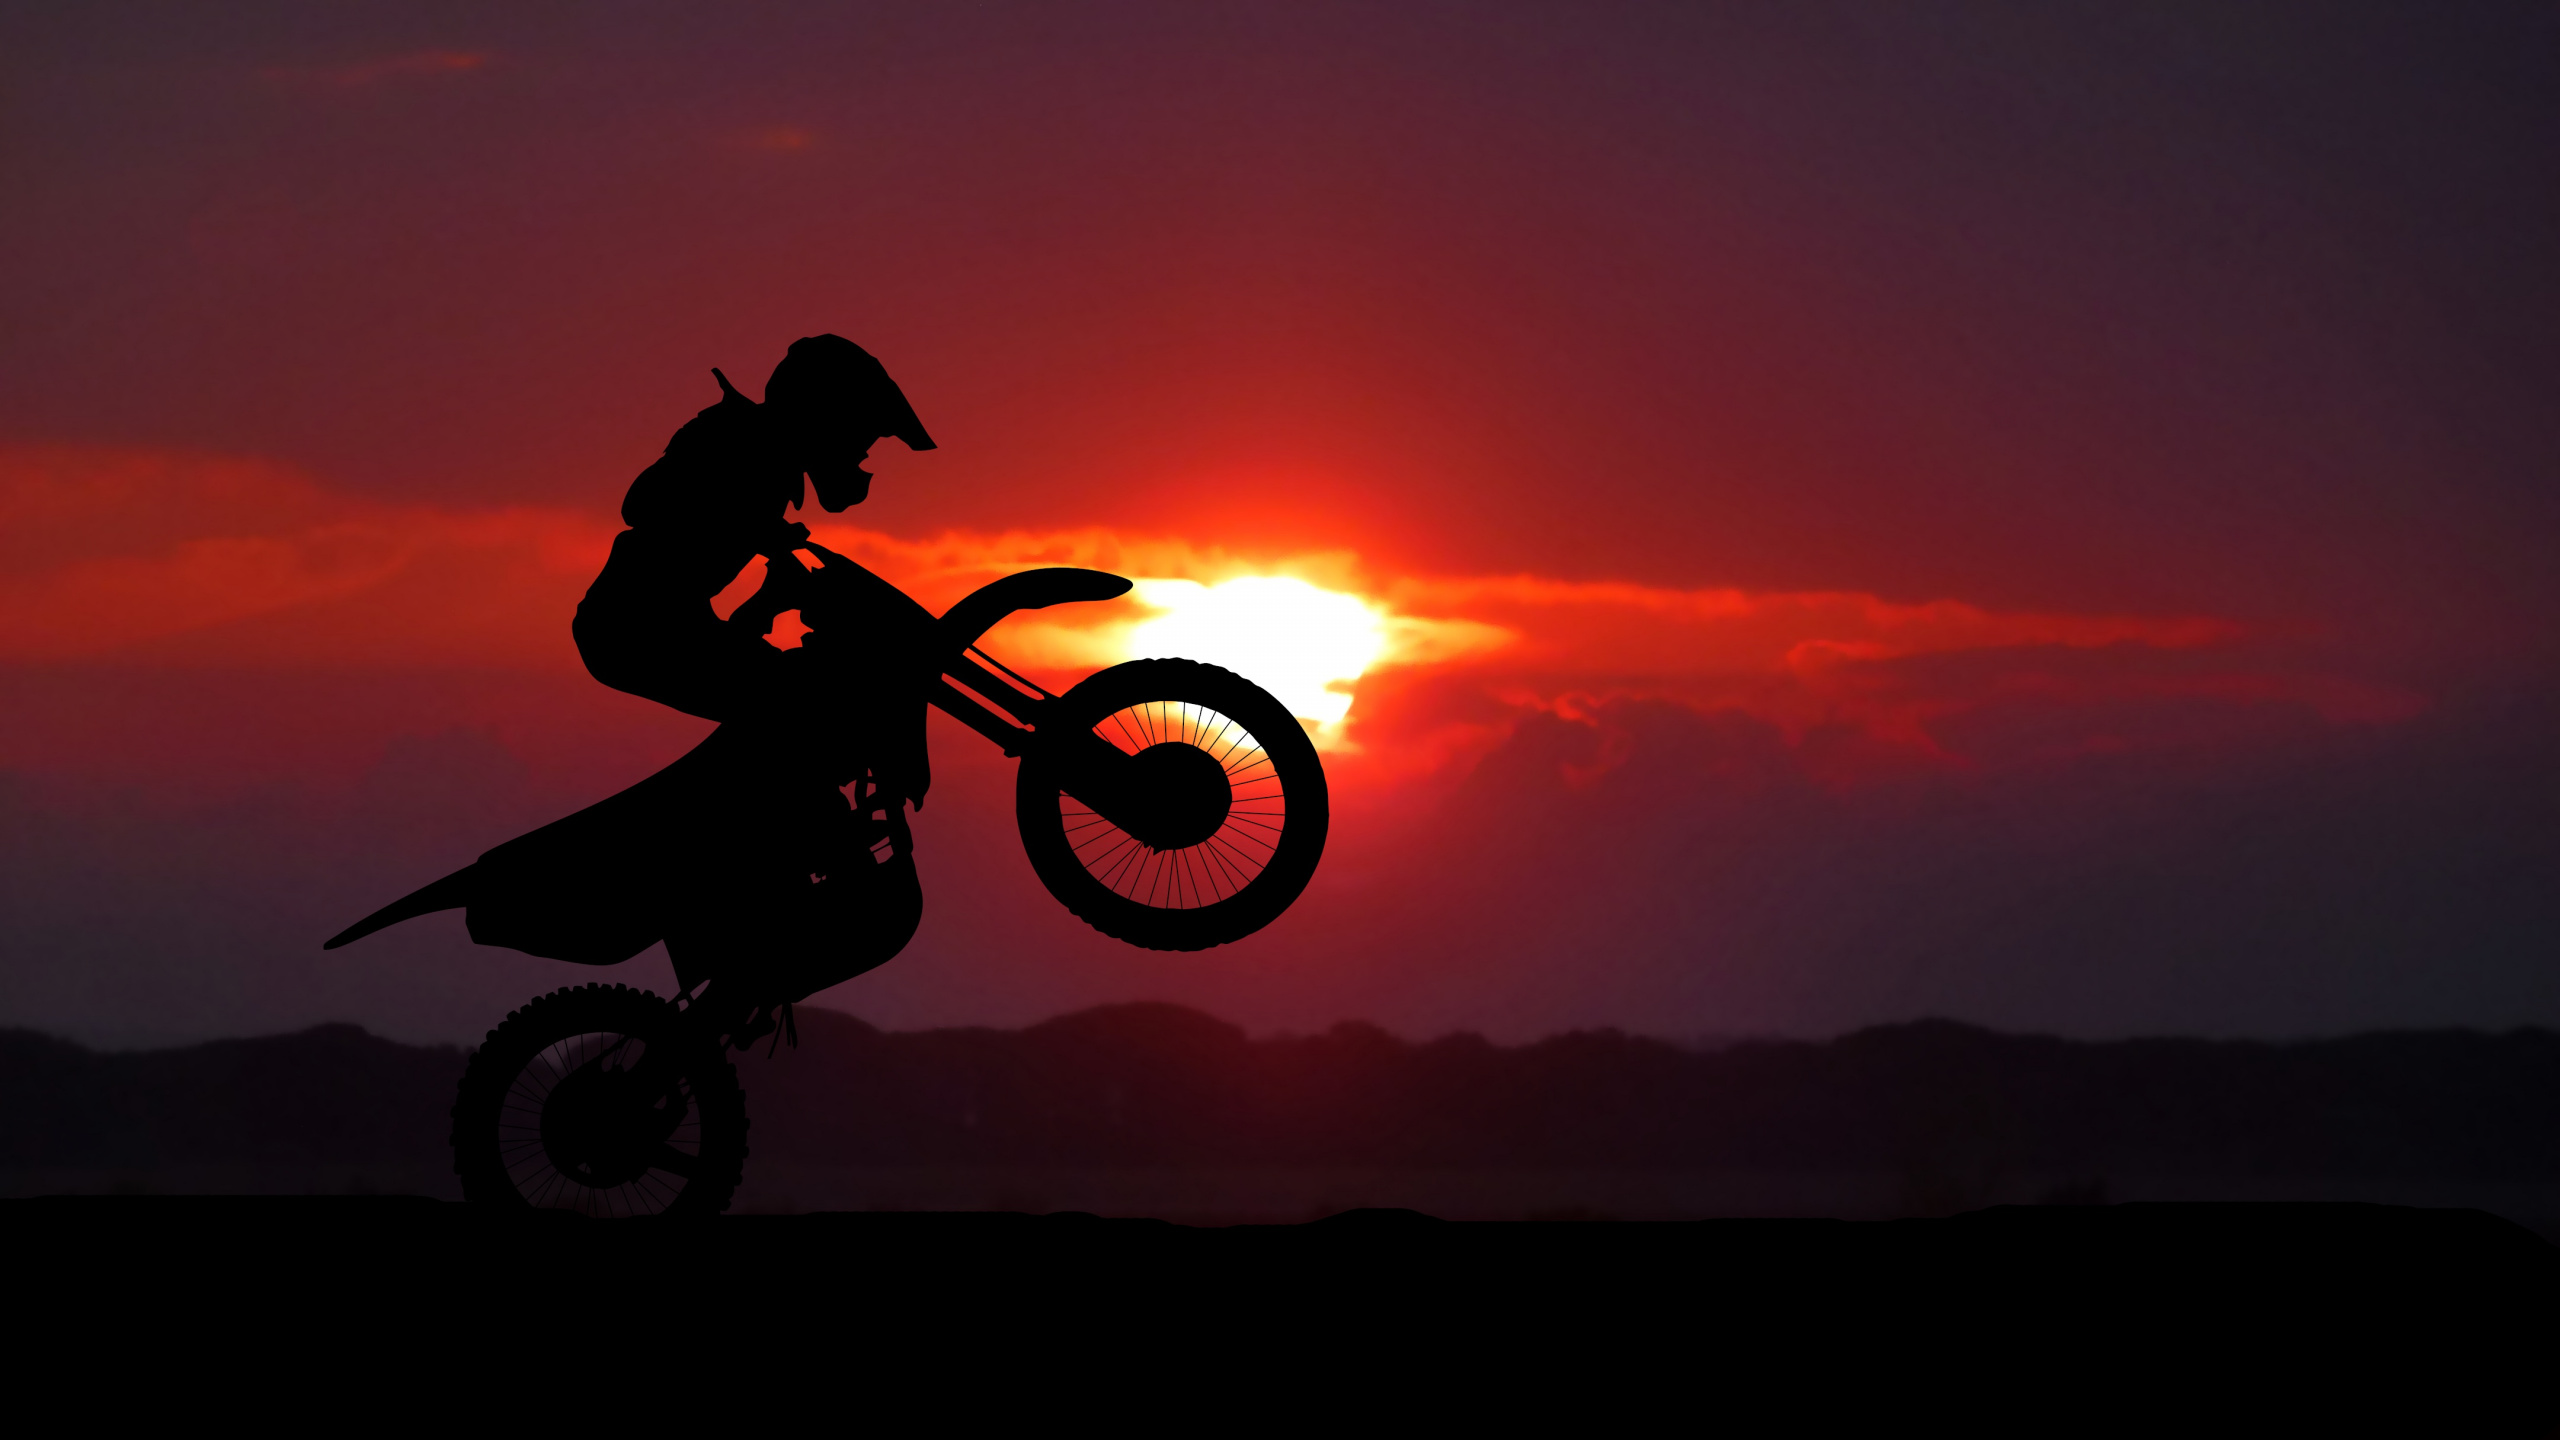 Silhouette of Man Riding Motocross Dirt Bike During Sunset. Wallpaper in 2560x1440 Resolution